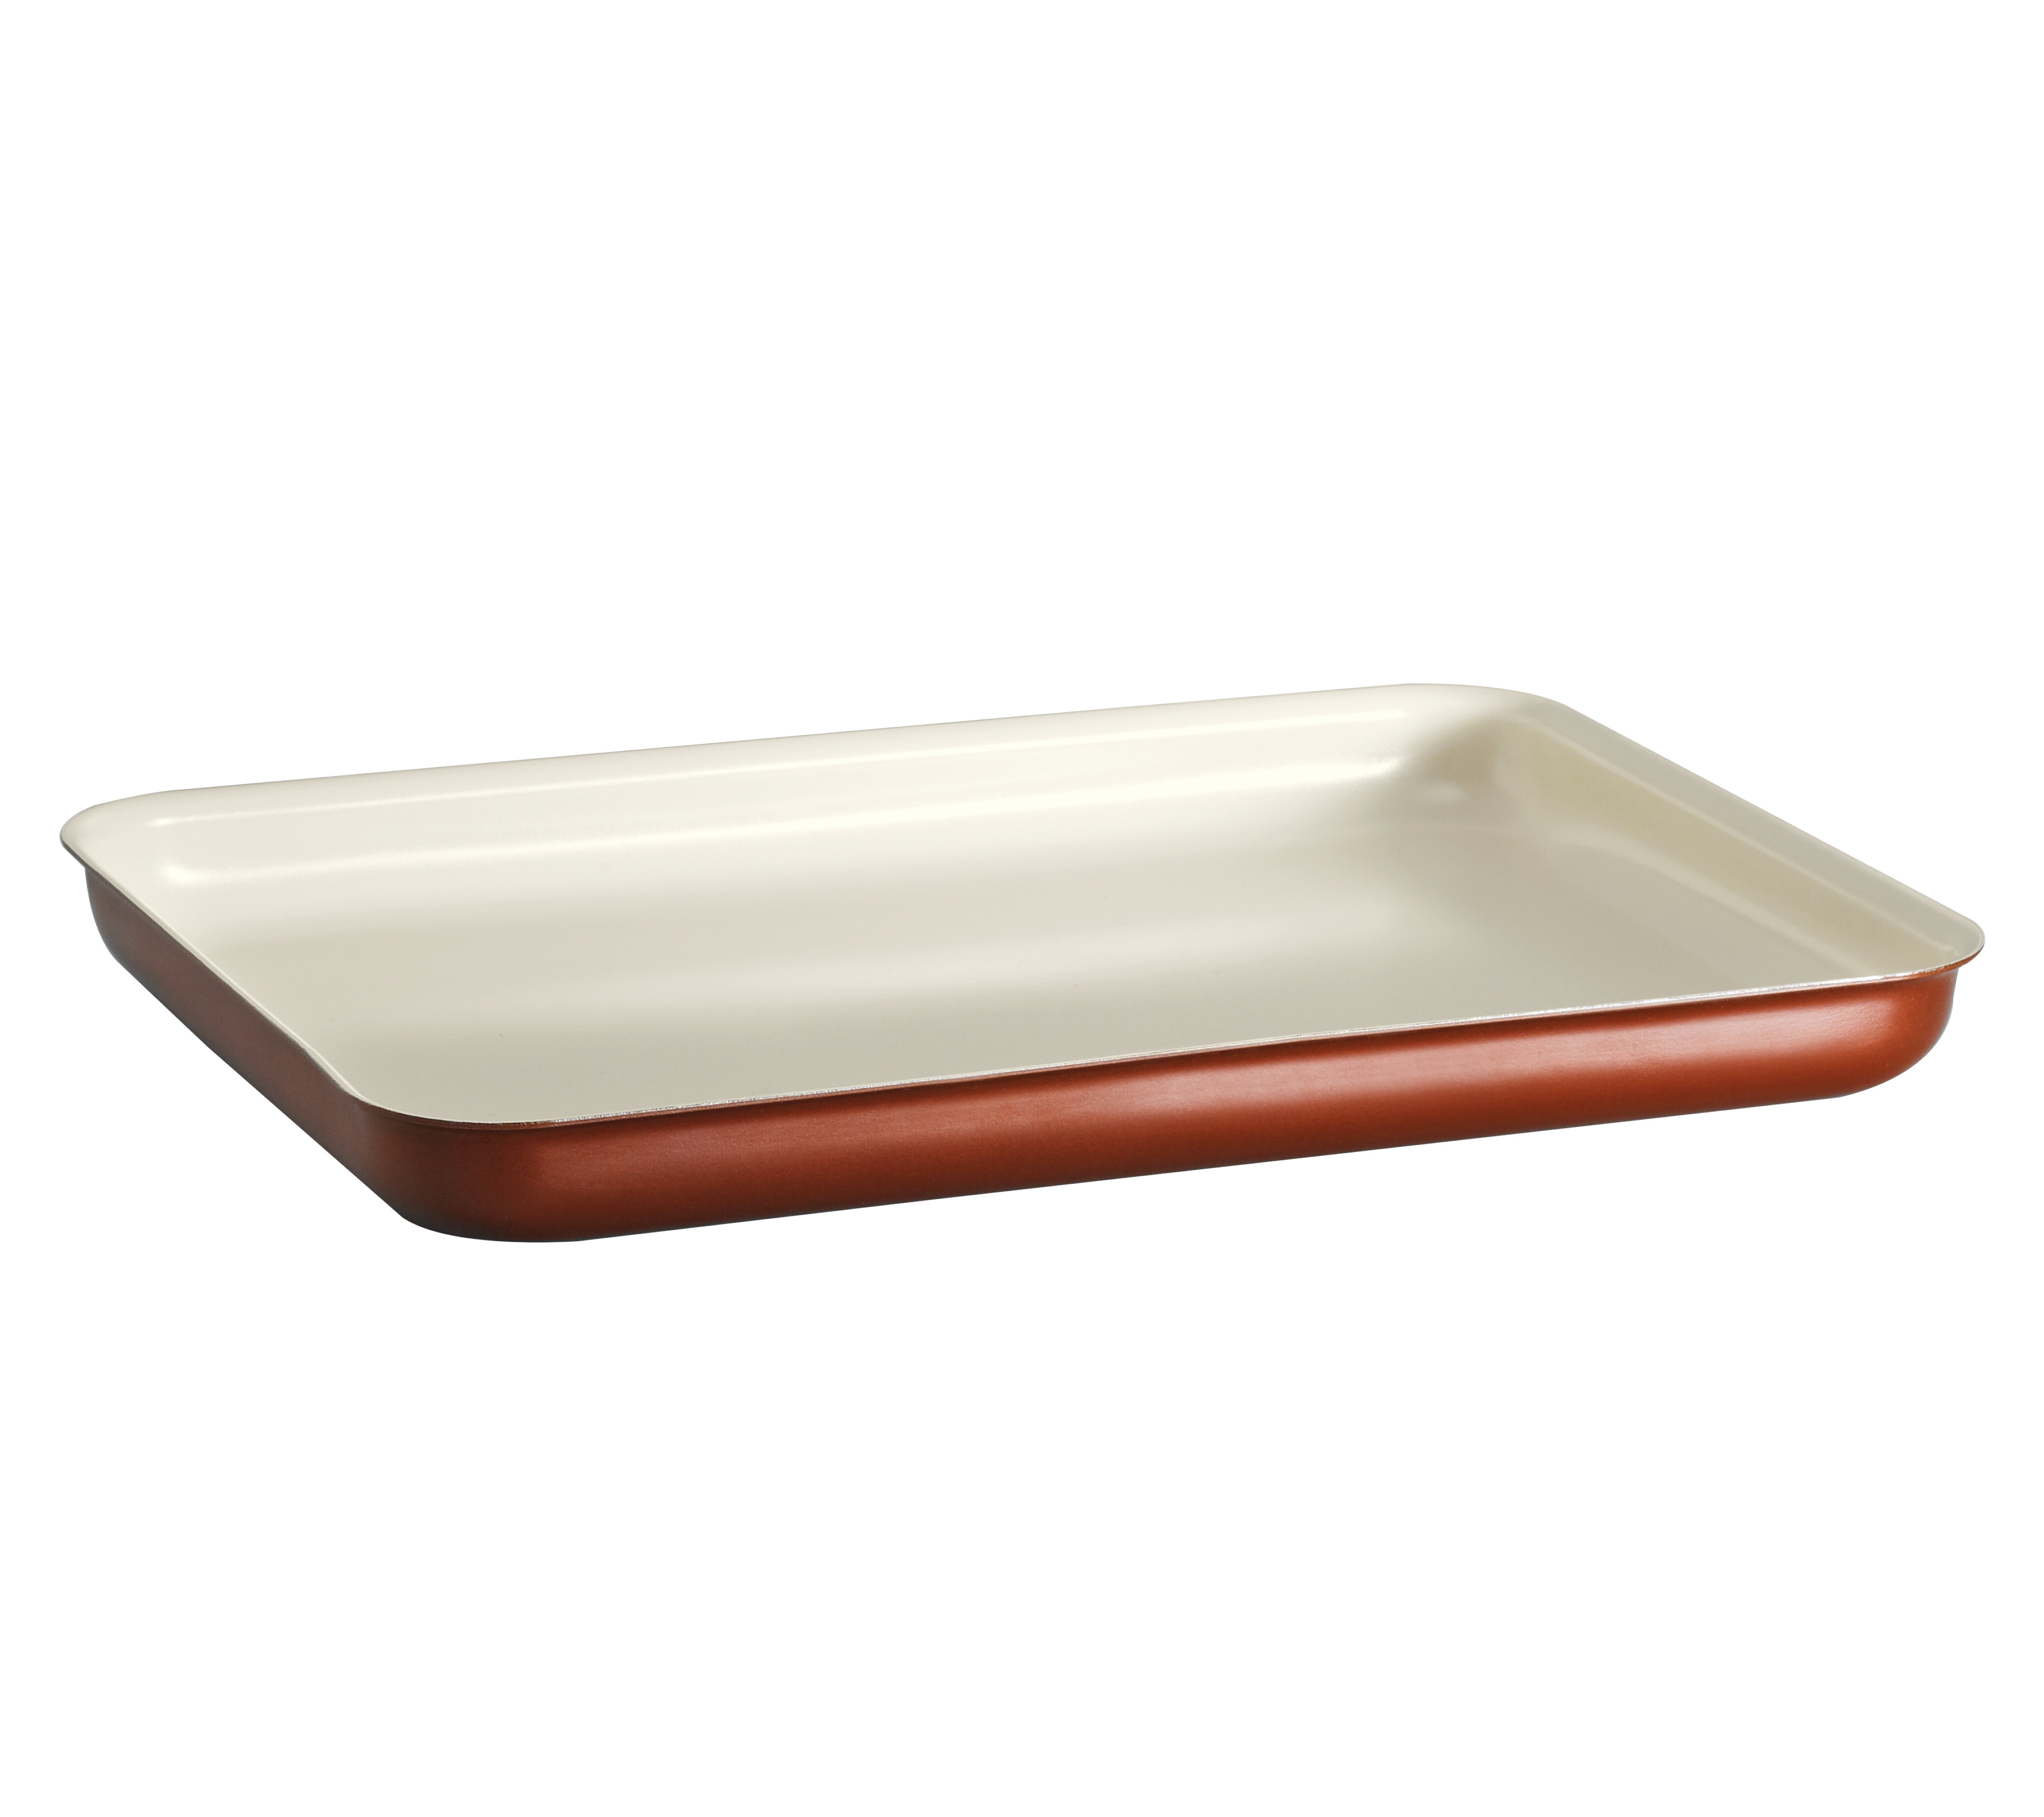 Tramontina Style Ceramica Non-Stick Baking Tray & Reviews